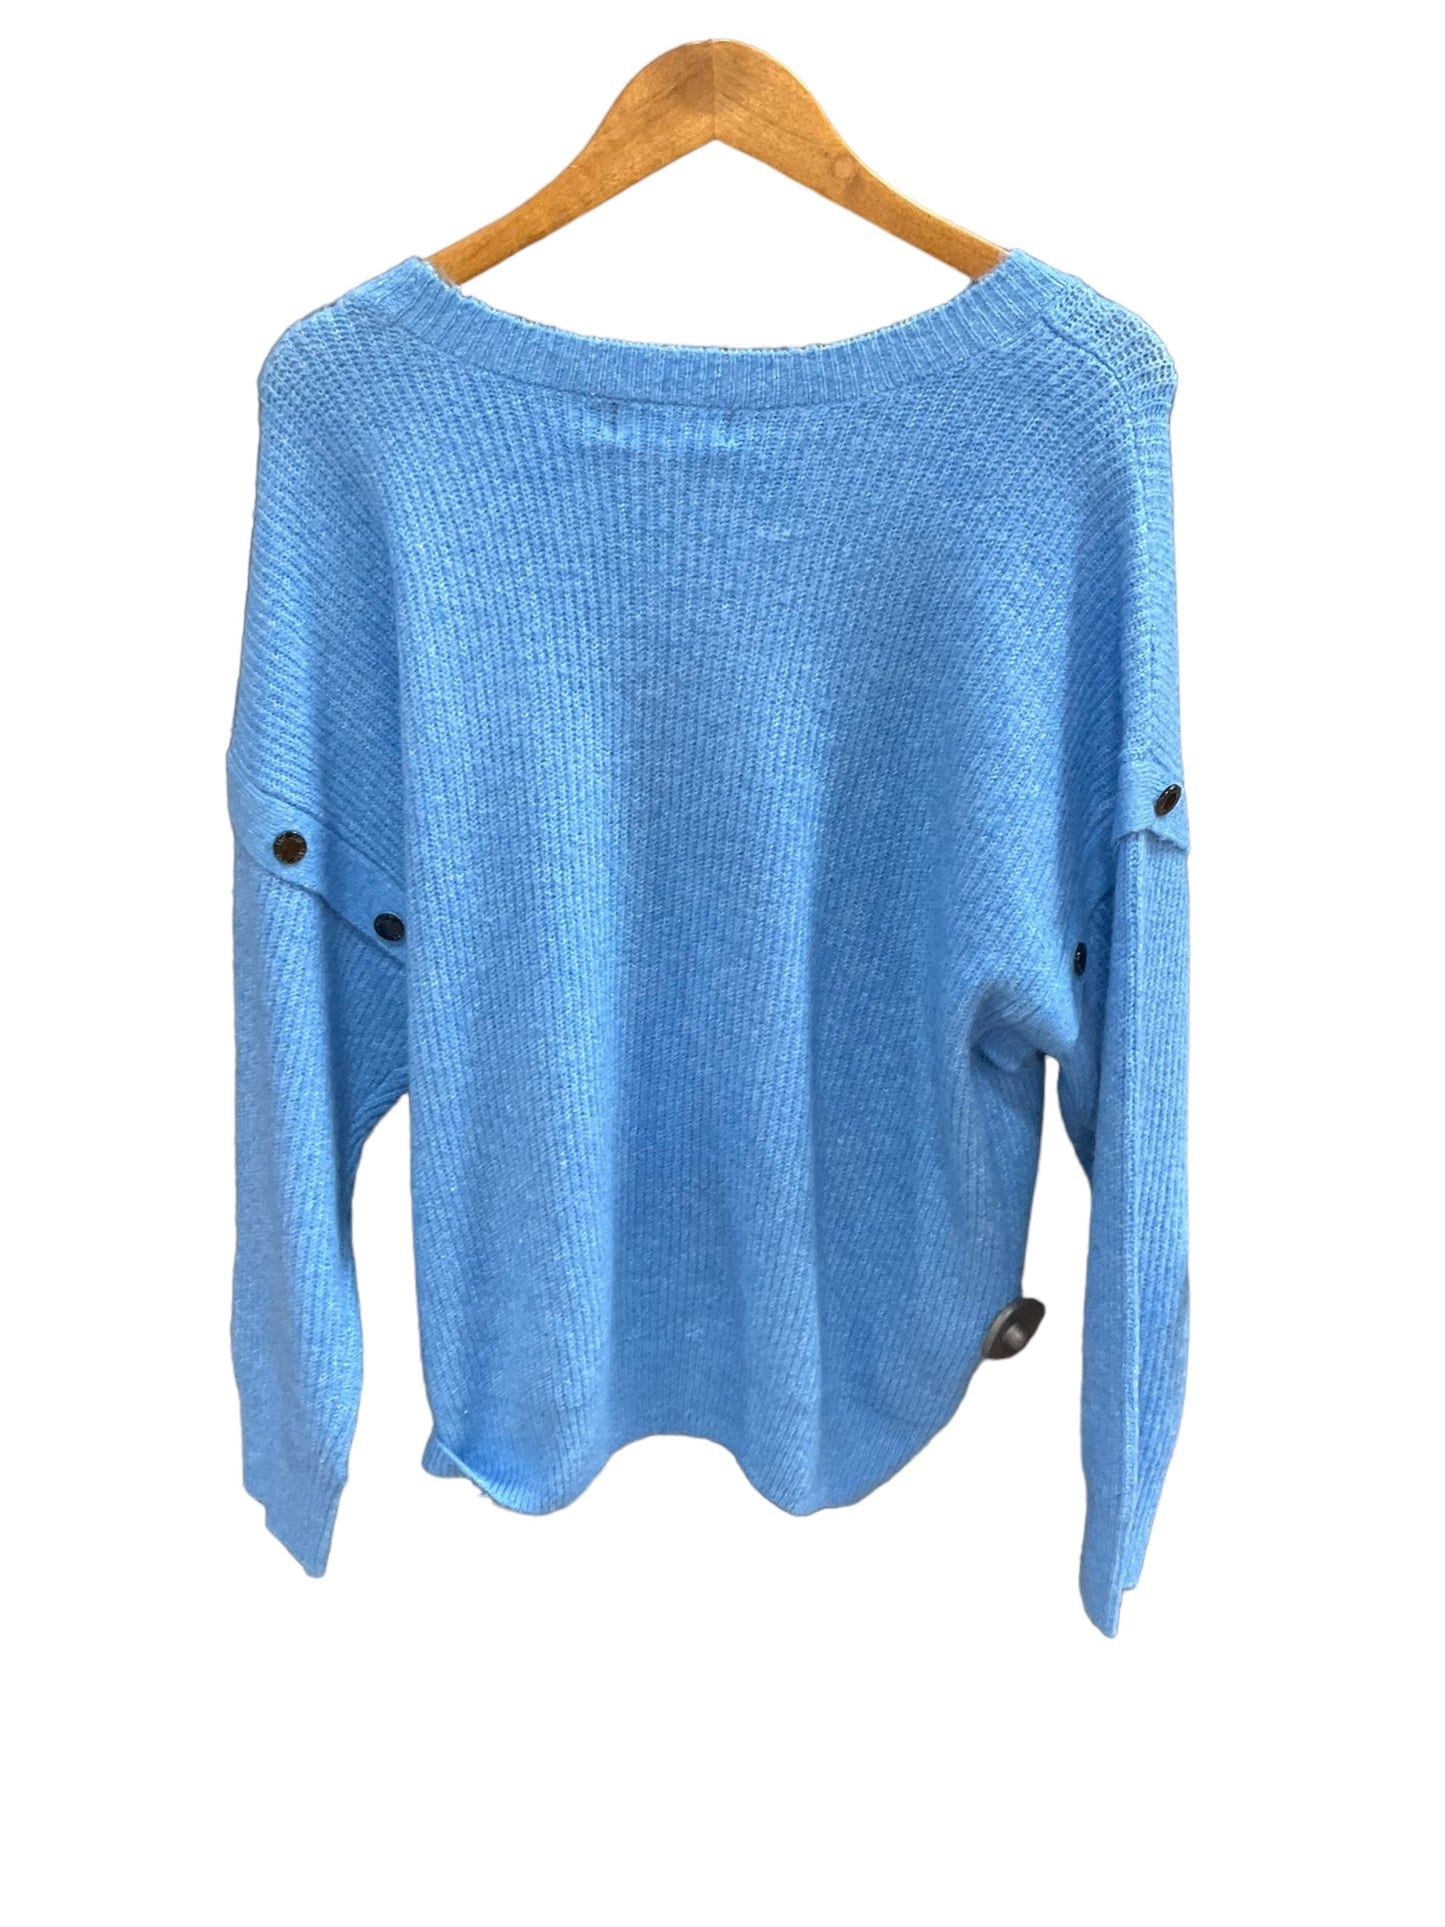 Sweater By Dkny  Size: 1x